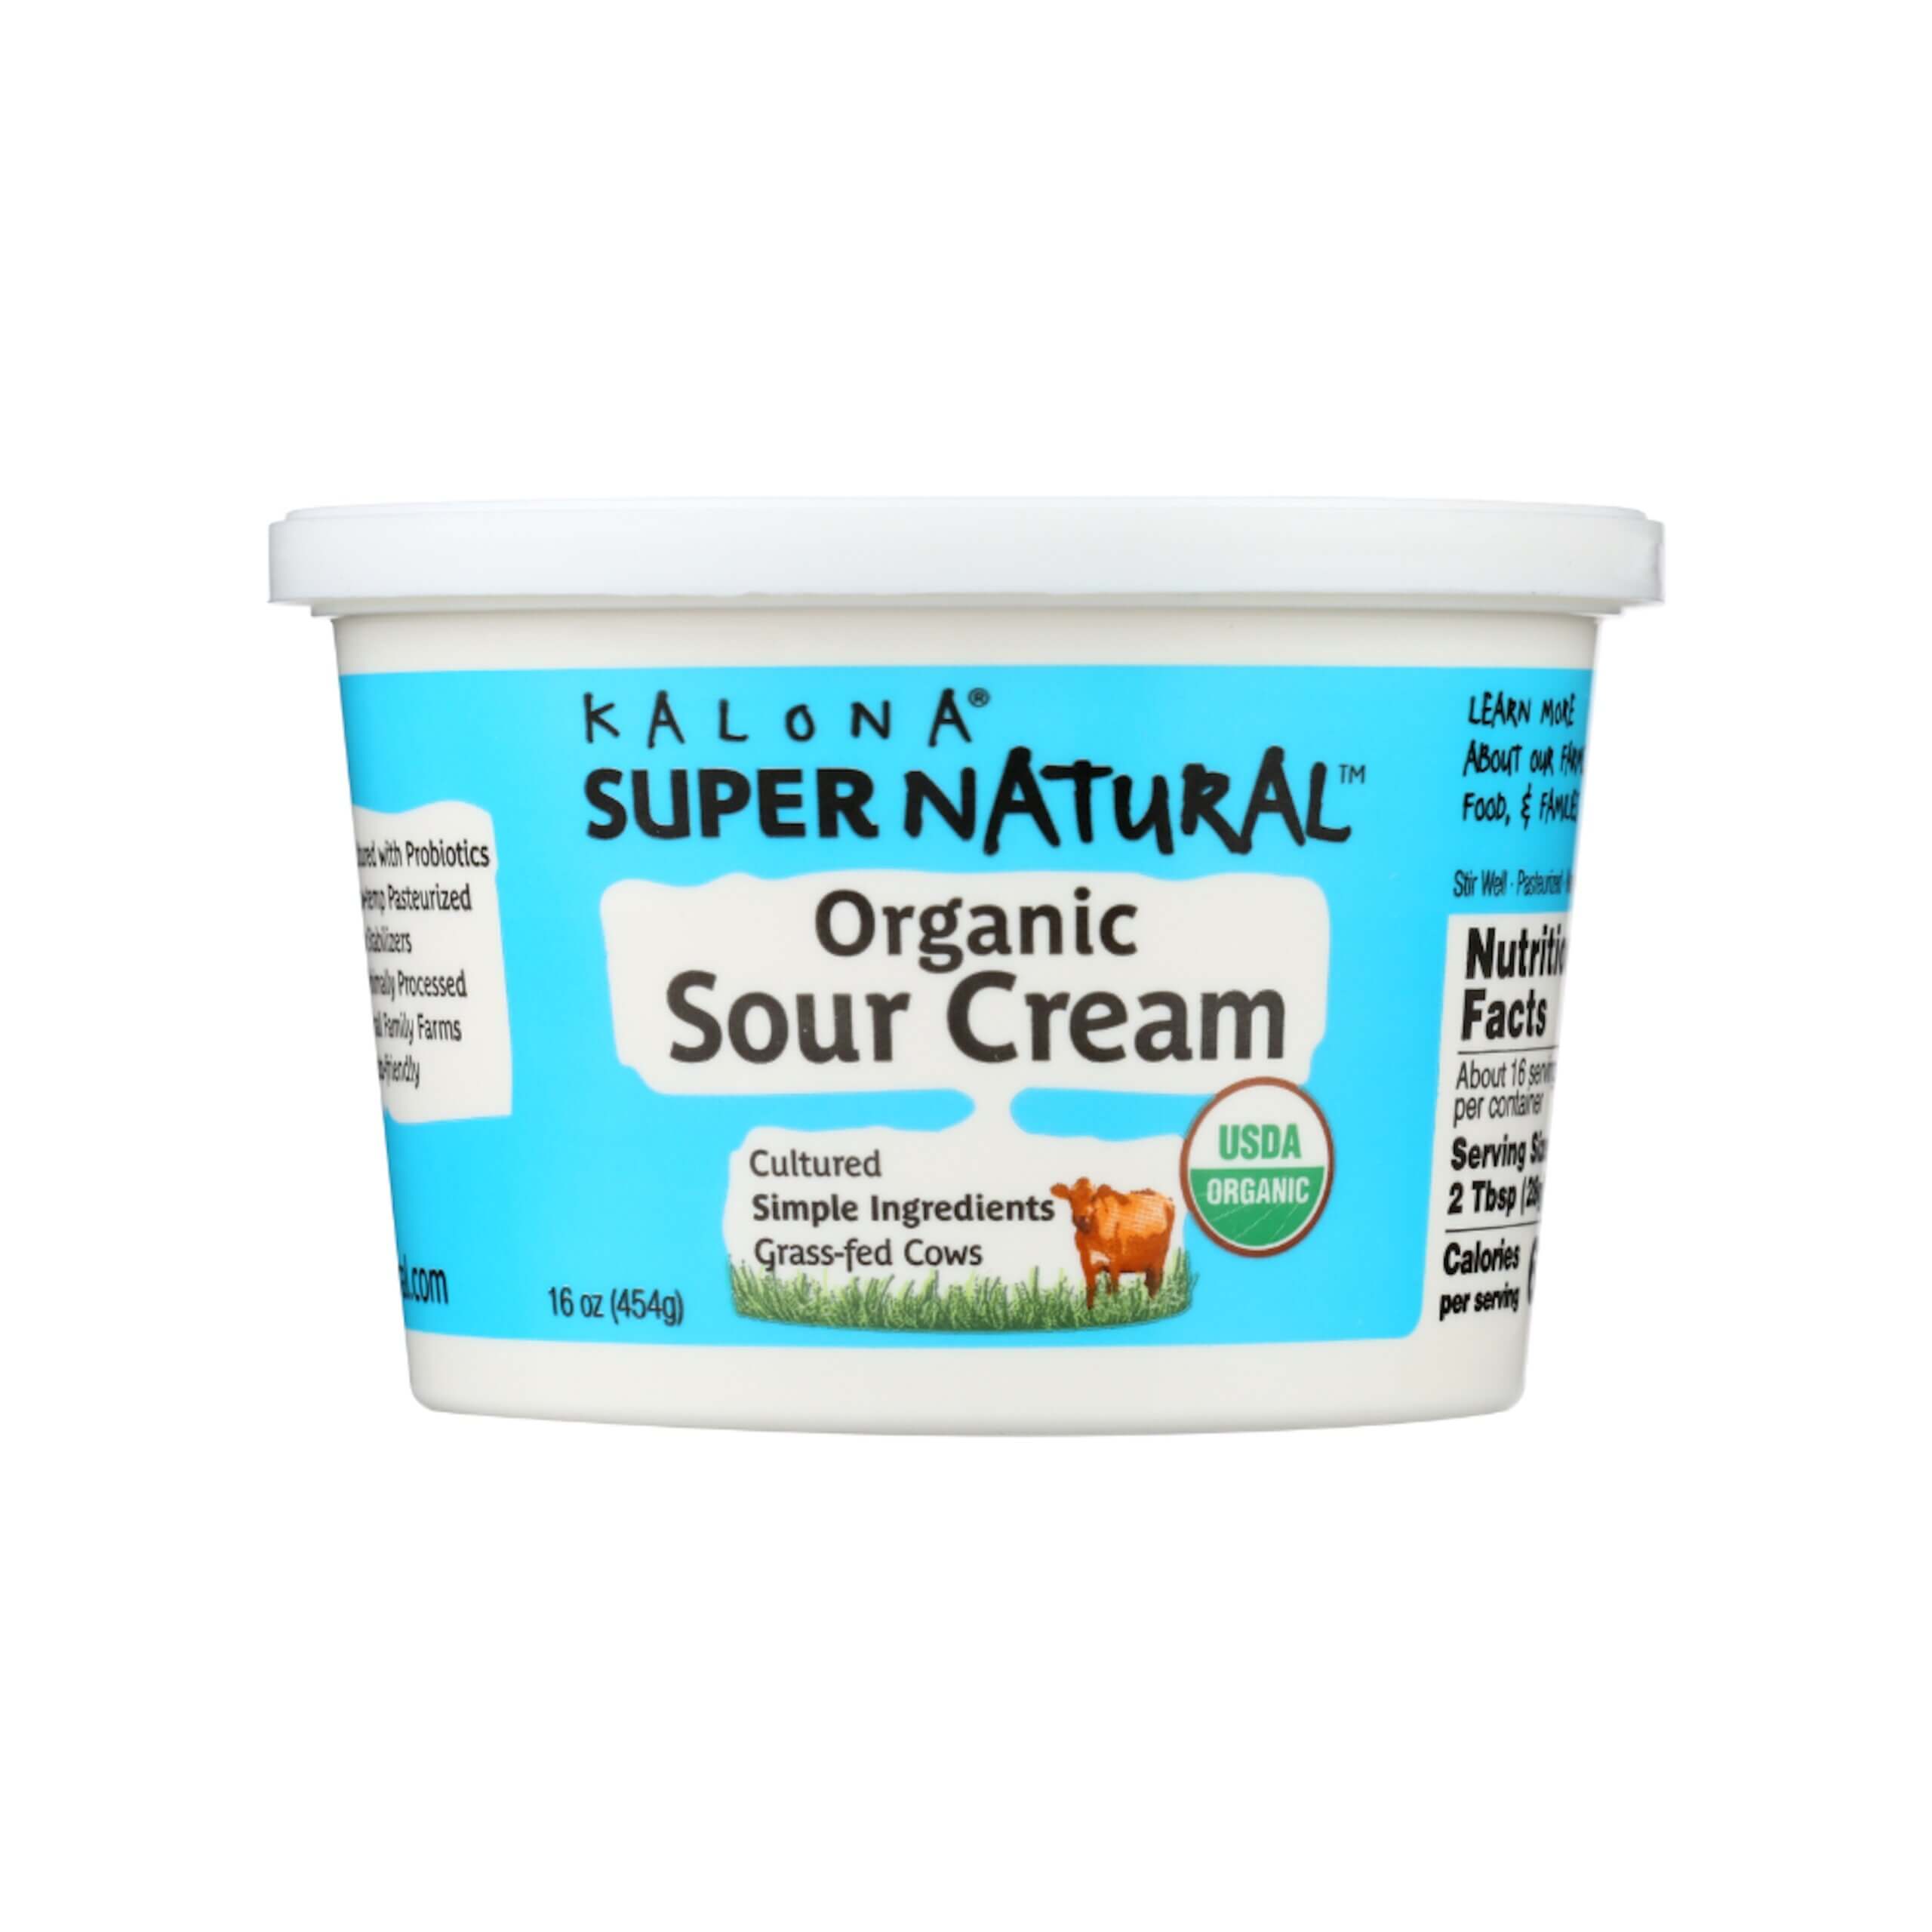 https://kalonasupernatural.com/wp-content/uploads/881245-26016-5_Organic-Sour-Cream-16oz-scaled.jpeg